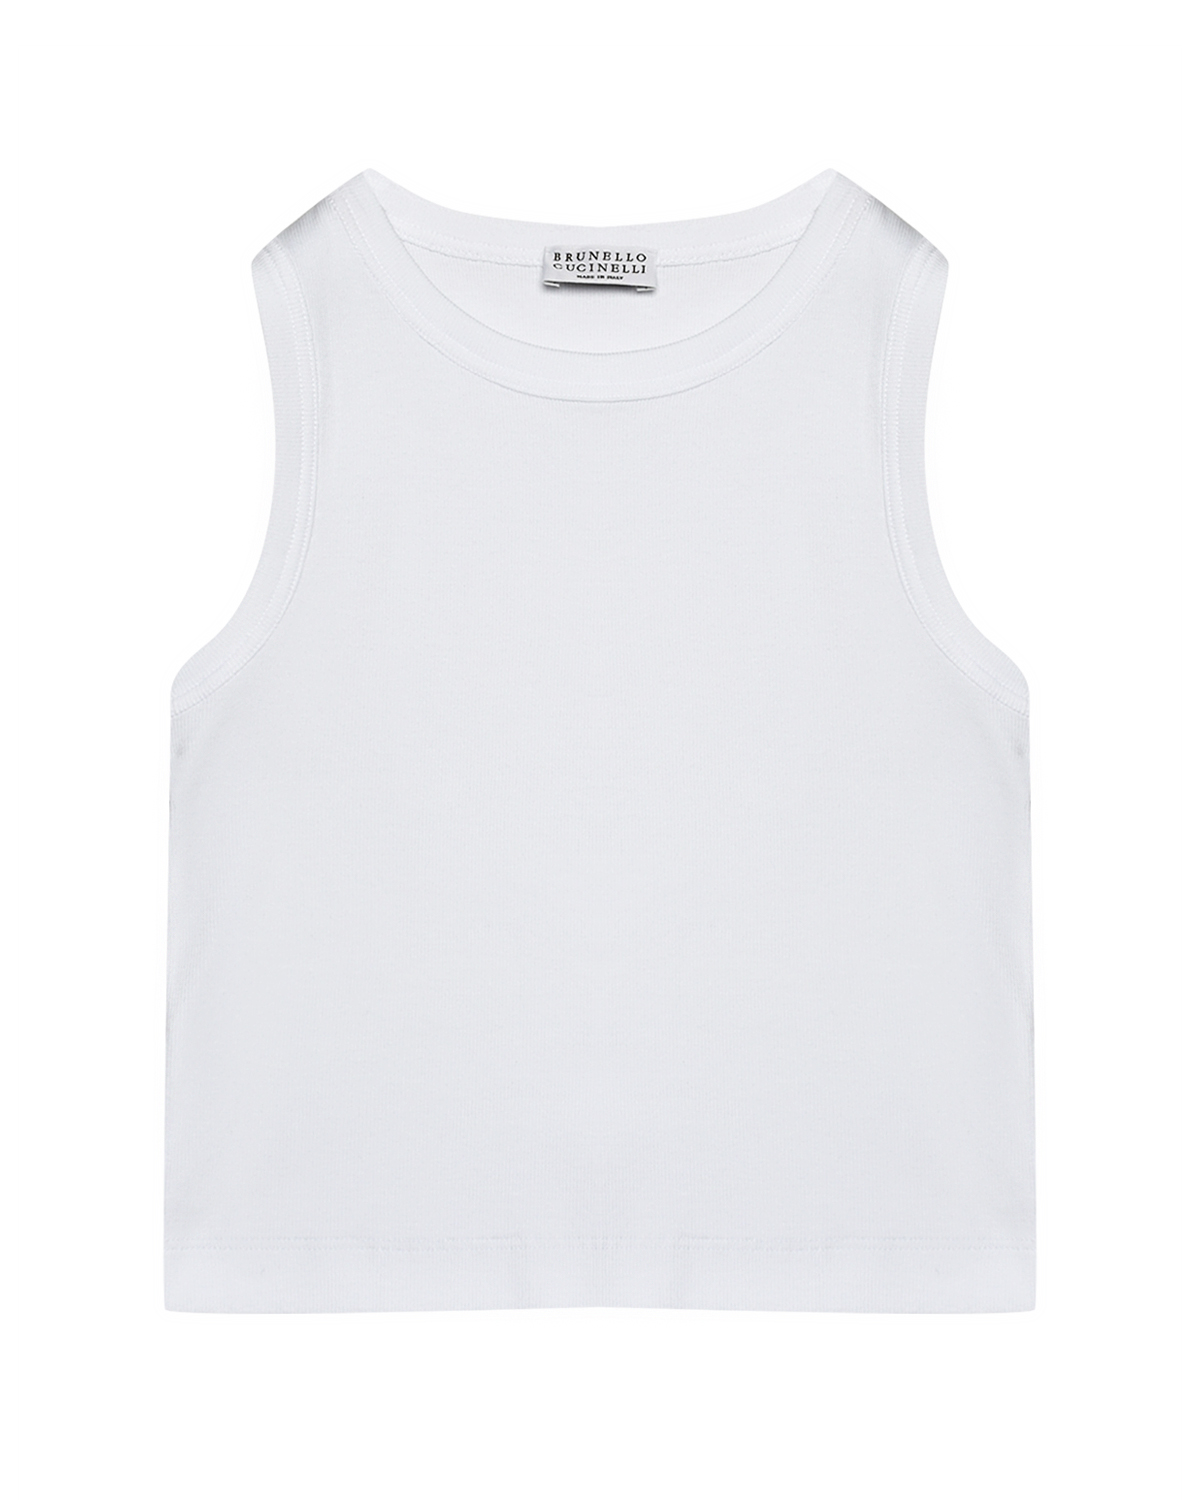 Футболка без рукавов, белая Brunello Cucinelli футболка с нагрудным карманом brunello cucinelli